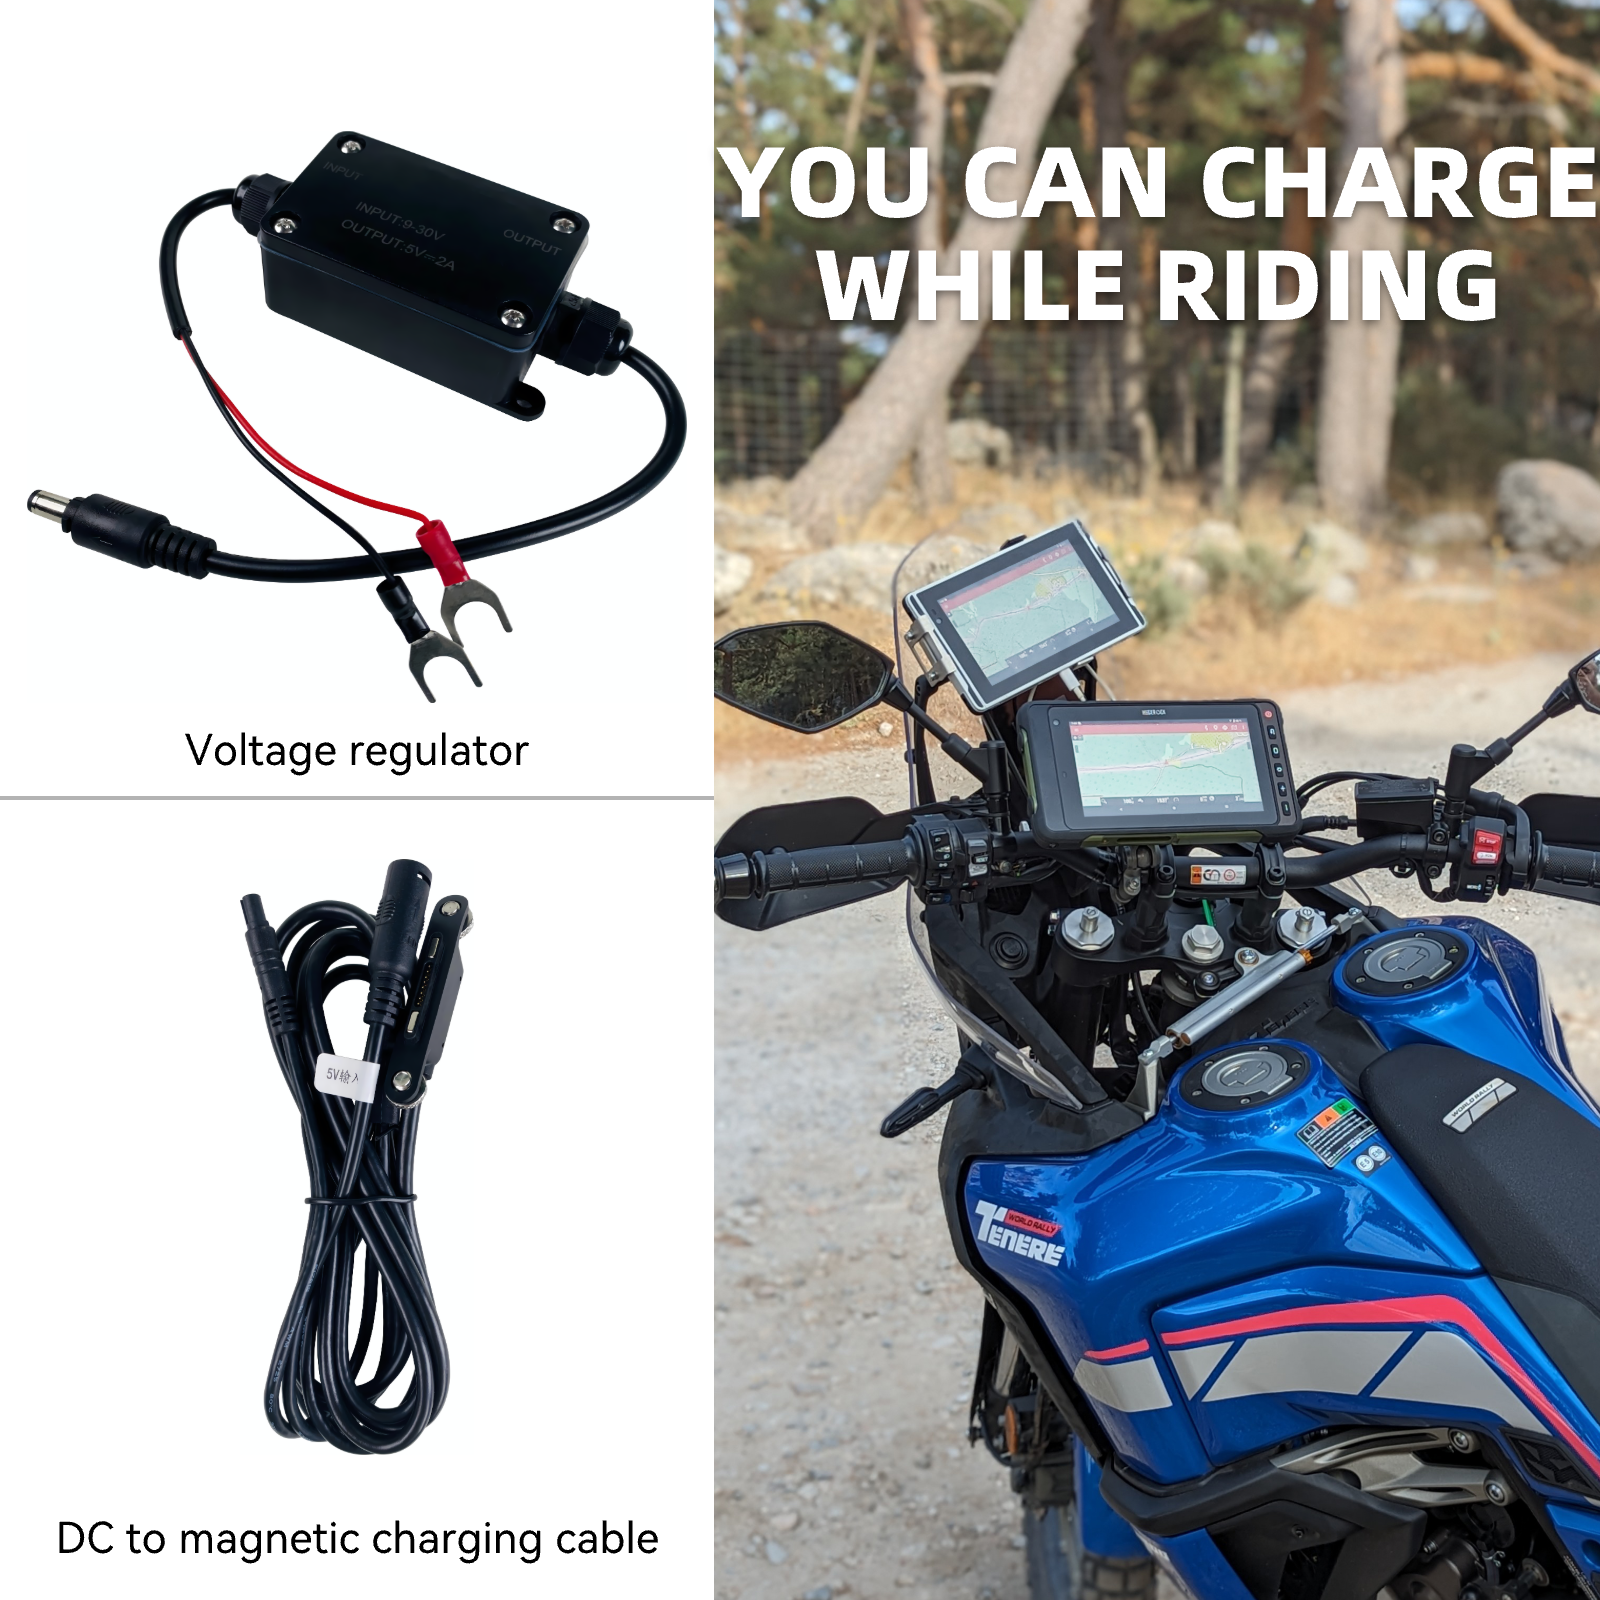 Hugerock X7 Motor Mount Bracket + Voltage Regulator for Motorcycle Bike Vehicle Tablet Display Accessories Multi-angle Adjustable Easy Installation